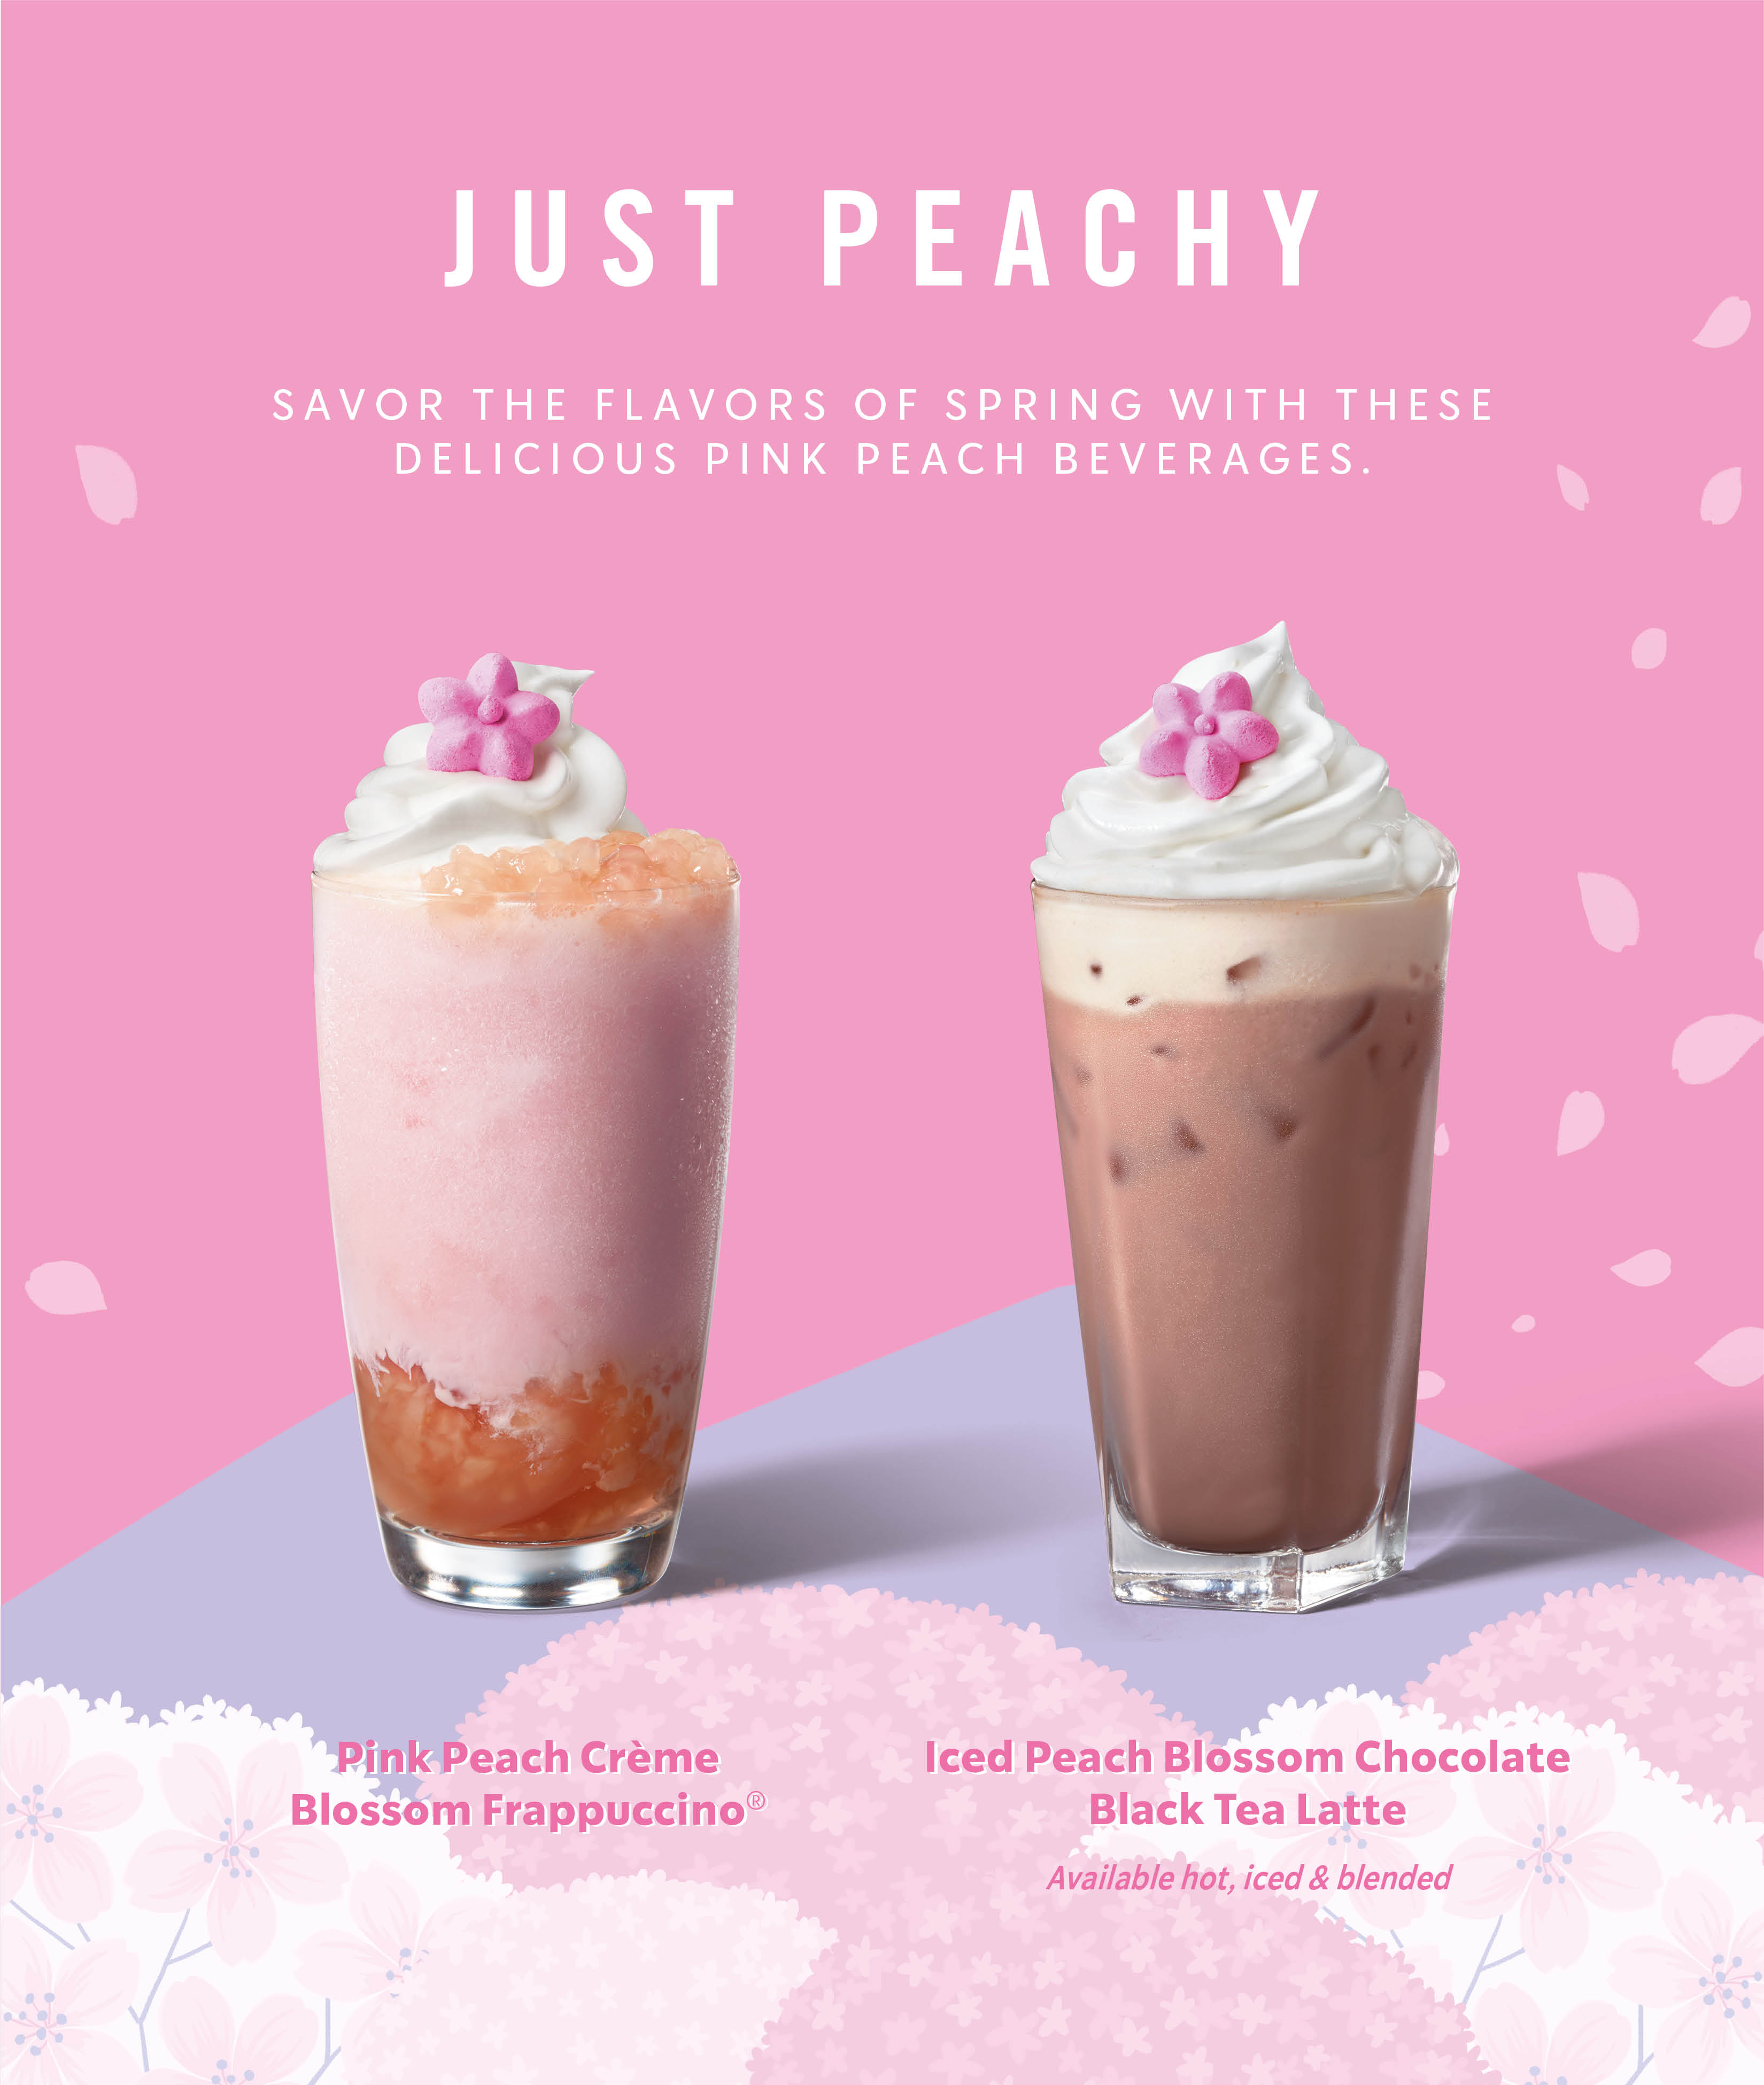 Starbucks S'pore launching new Pink Peach Crème Blossom Frappuccino